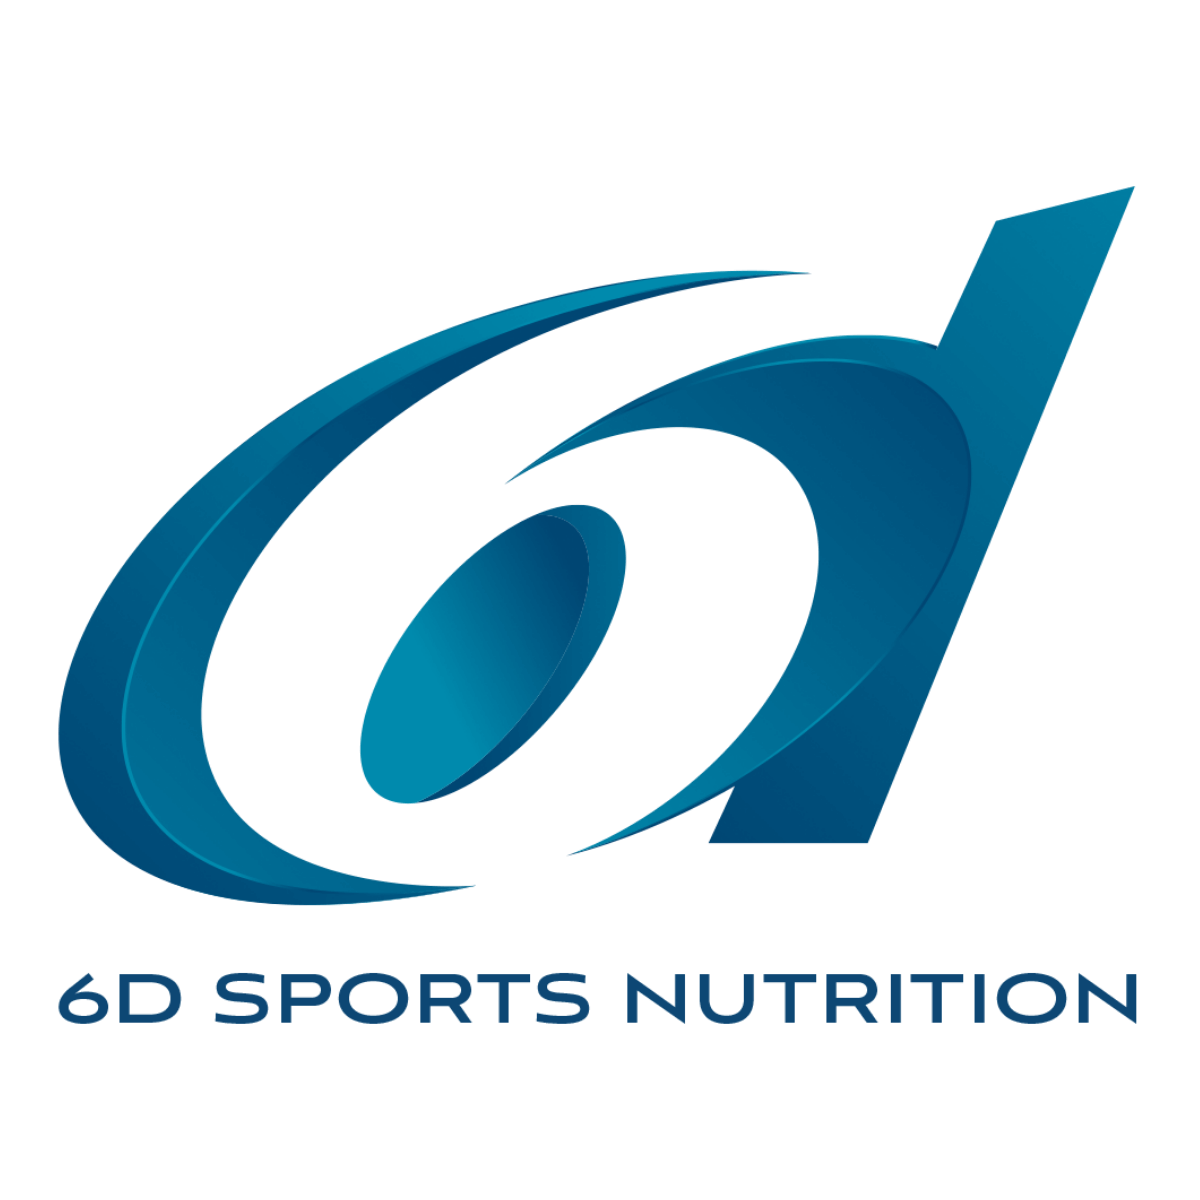 6d sport nutrition